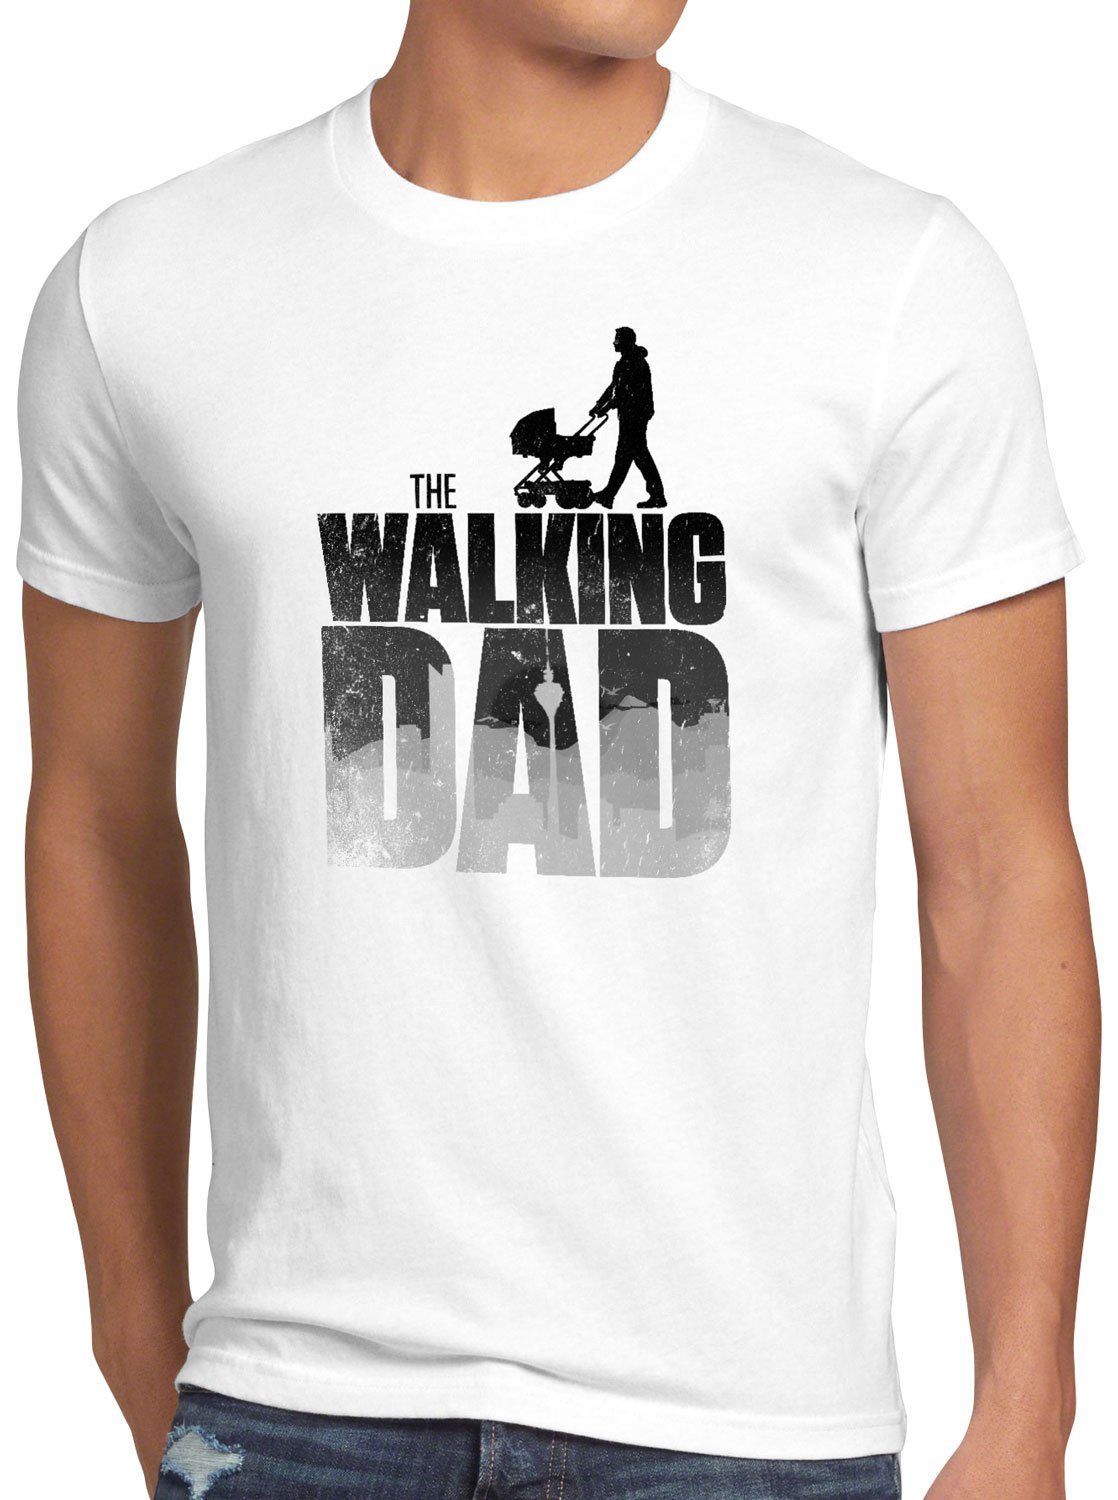 Dad style3 The Walking Herren weiß Print-Shirt zombie T-Shirt